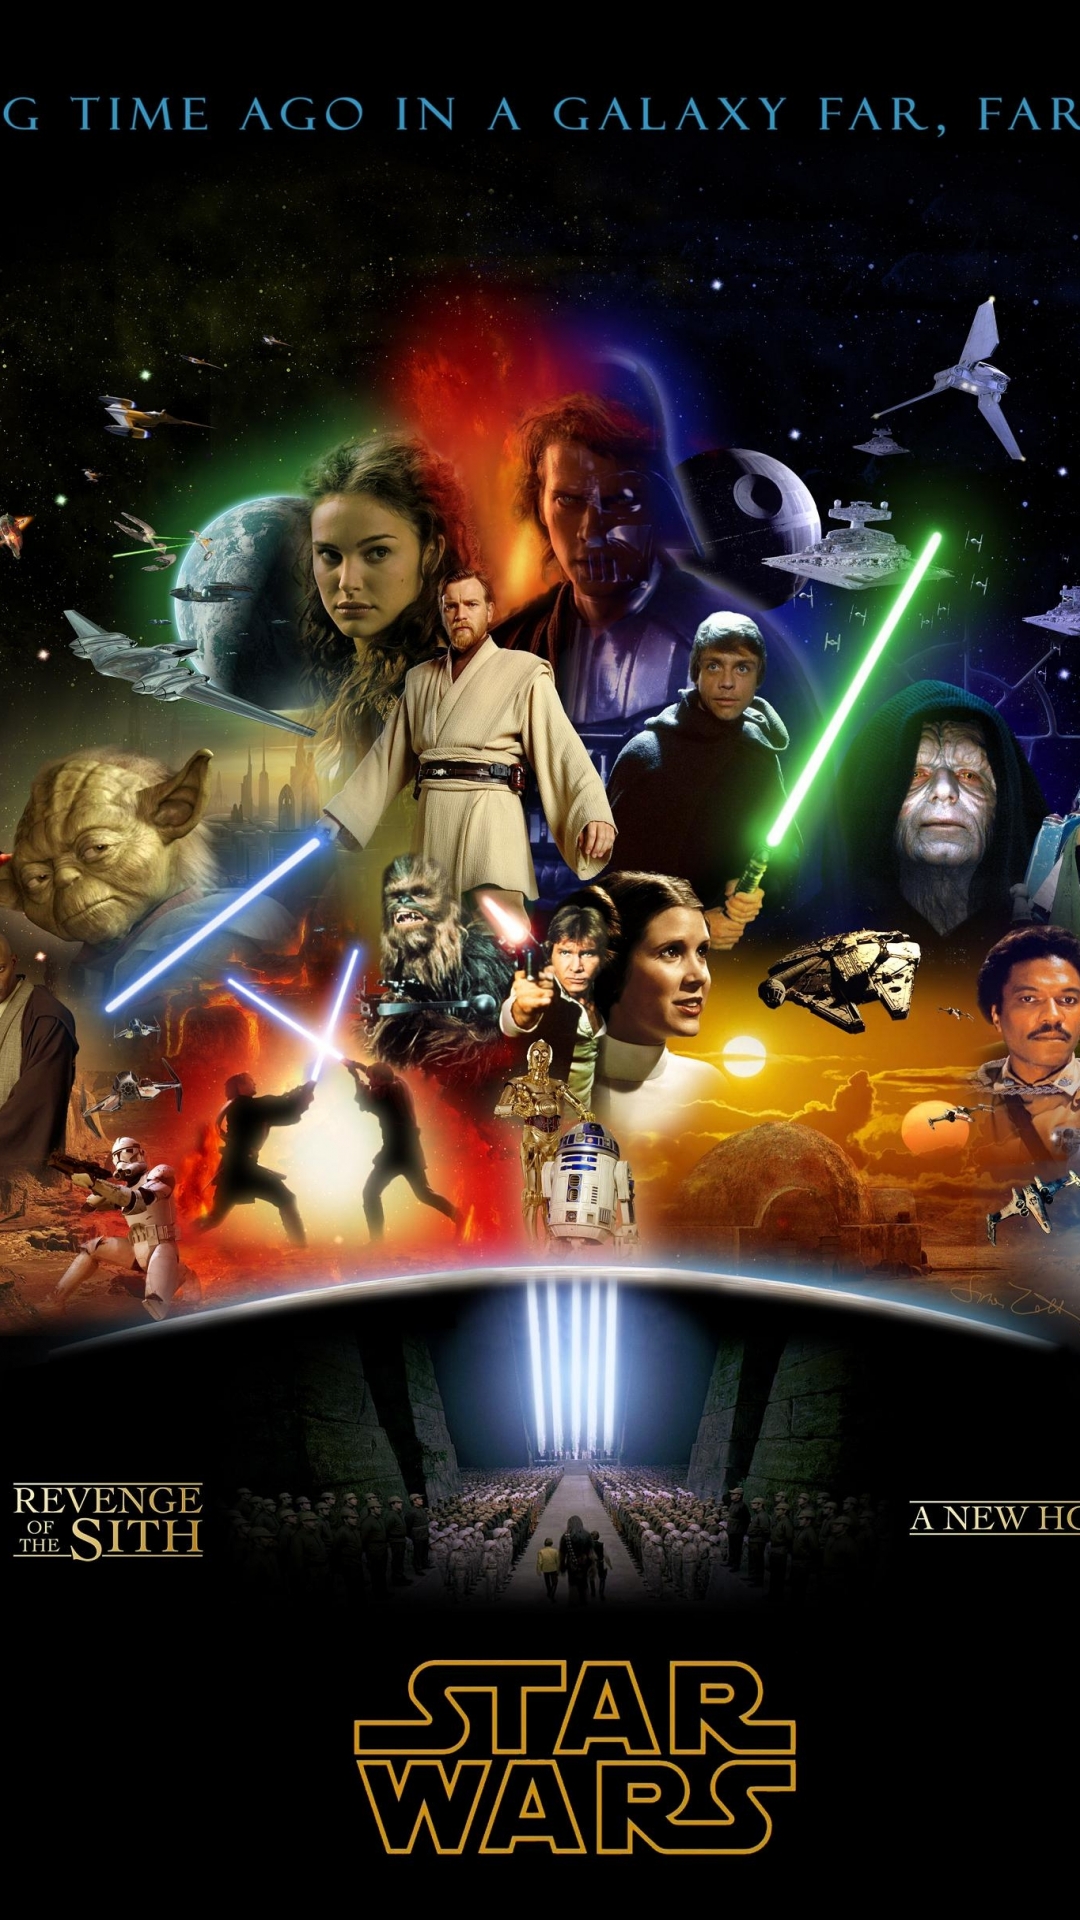 Star wars poster iPhone 6s wallpaper HD iPhones Backgrounds